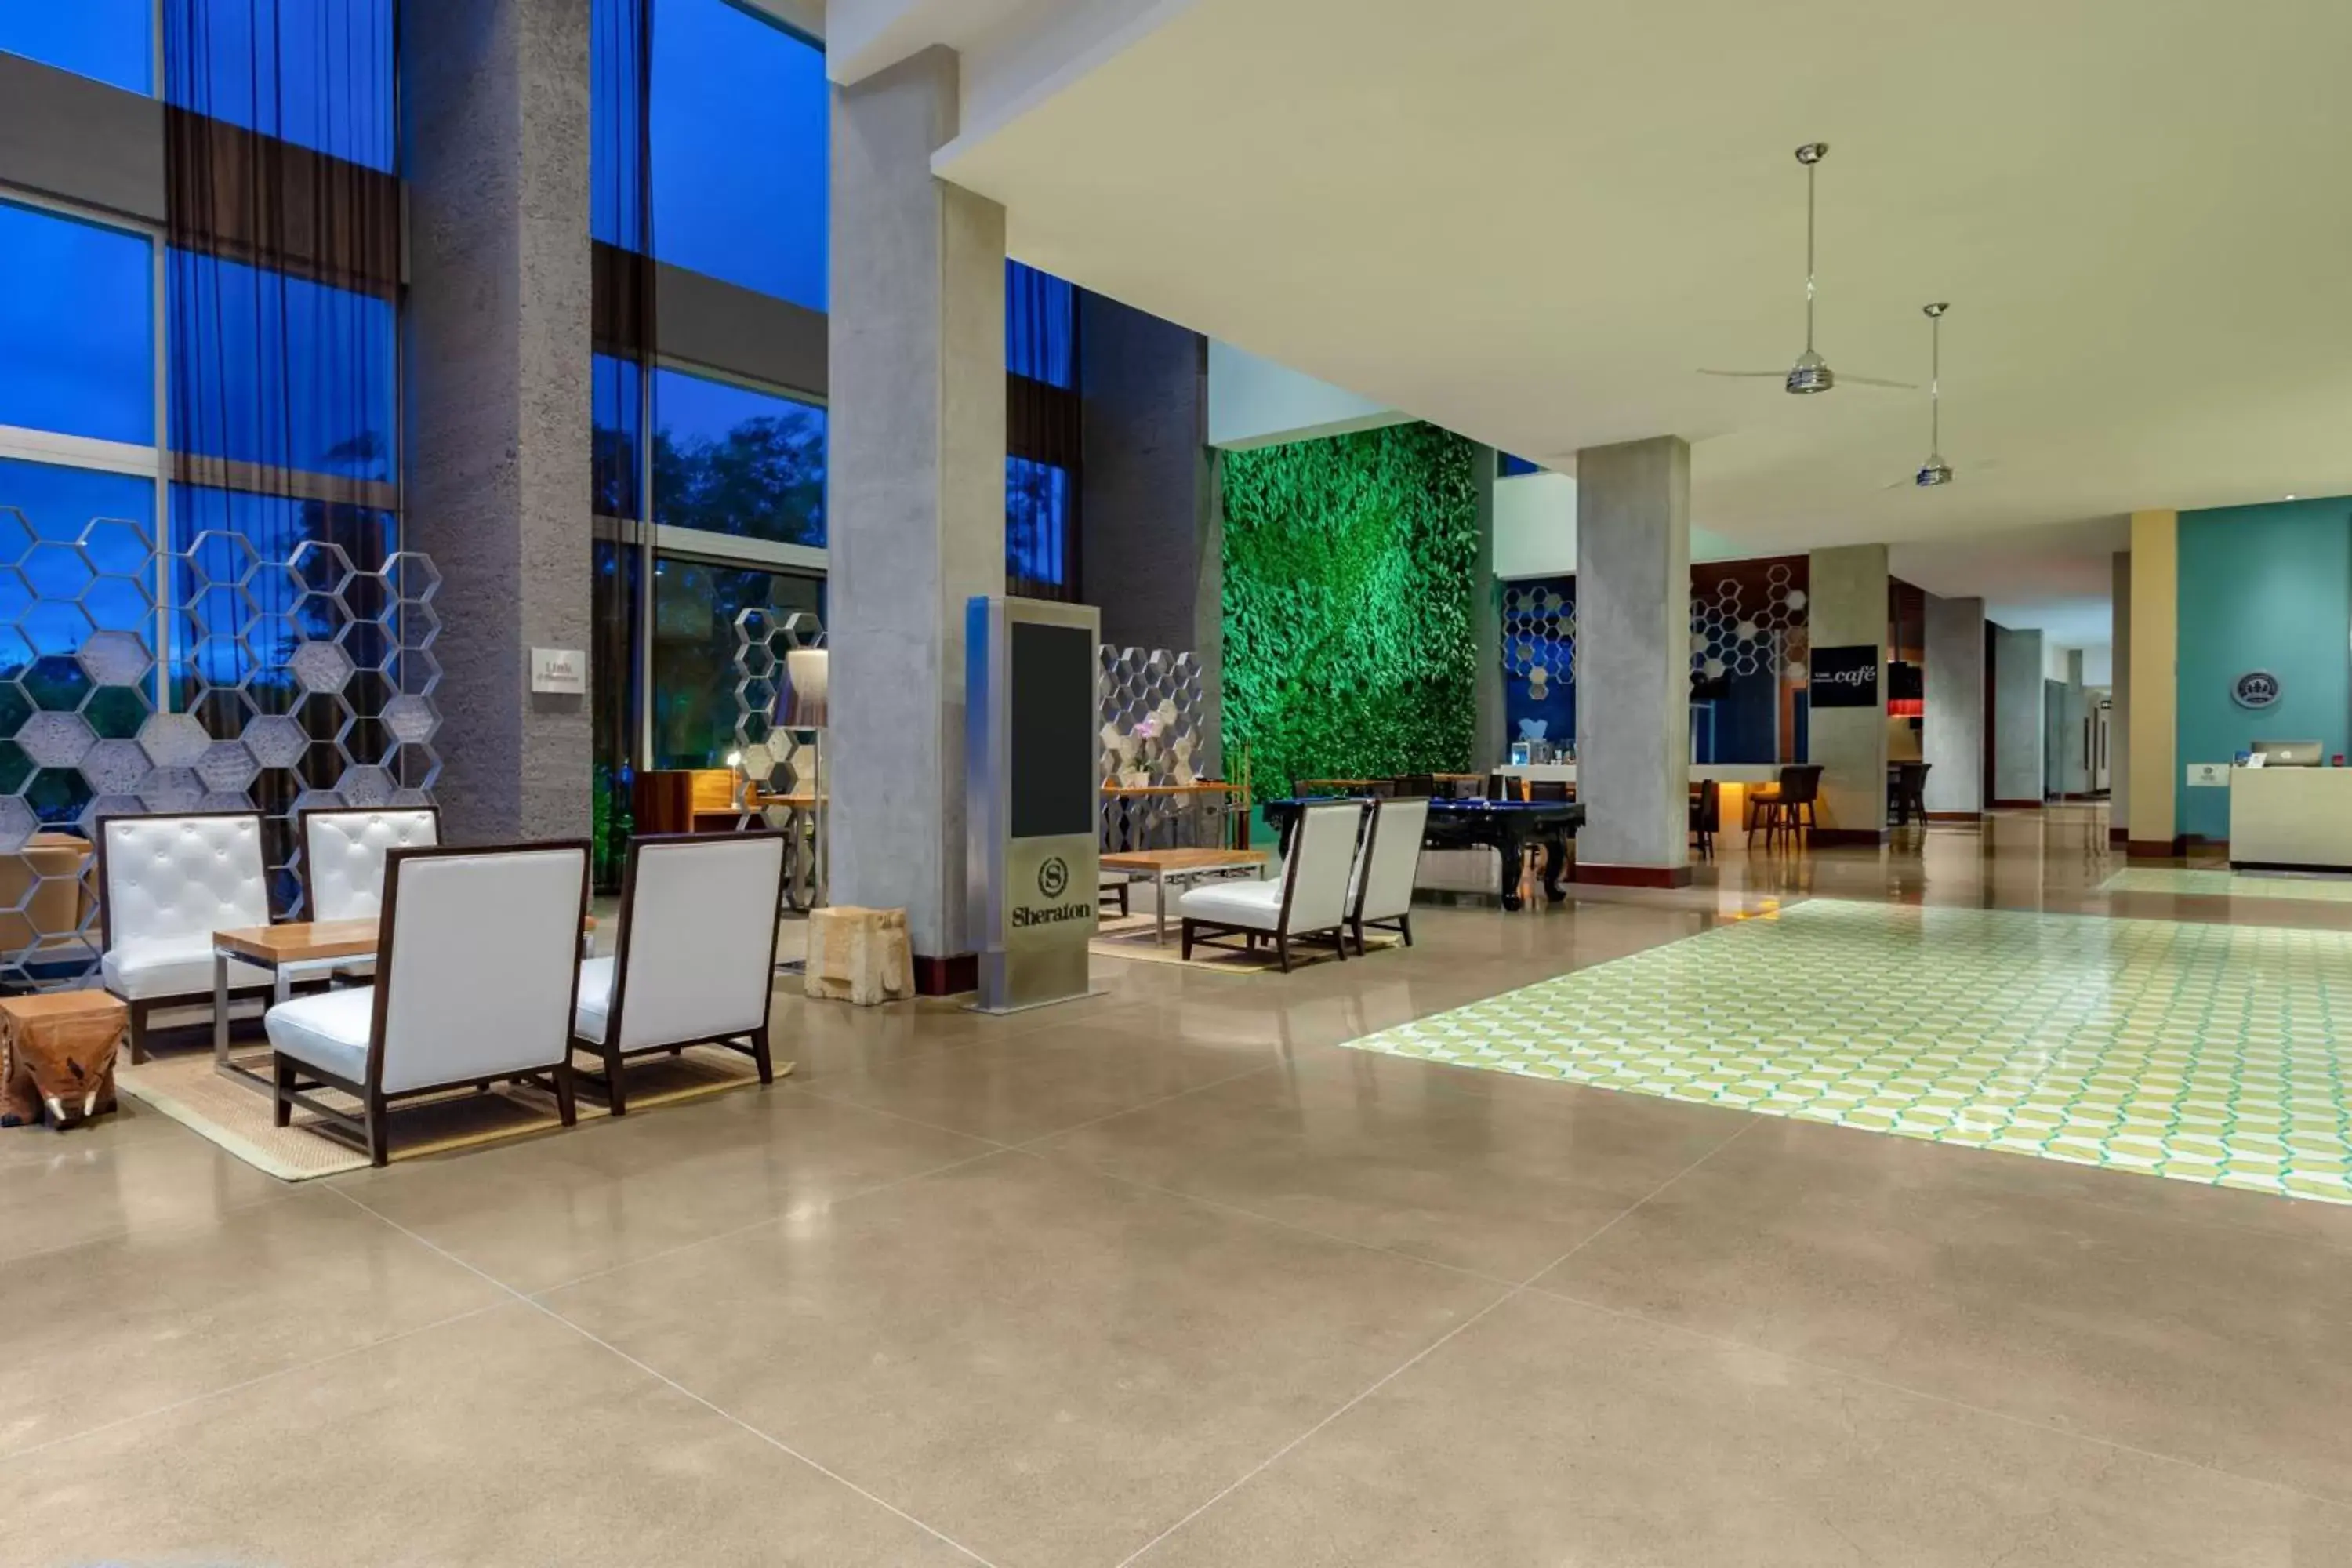 Lobby or reception in Sheraton San Jose Hotel, Costa Rica